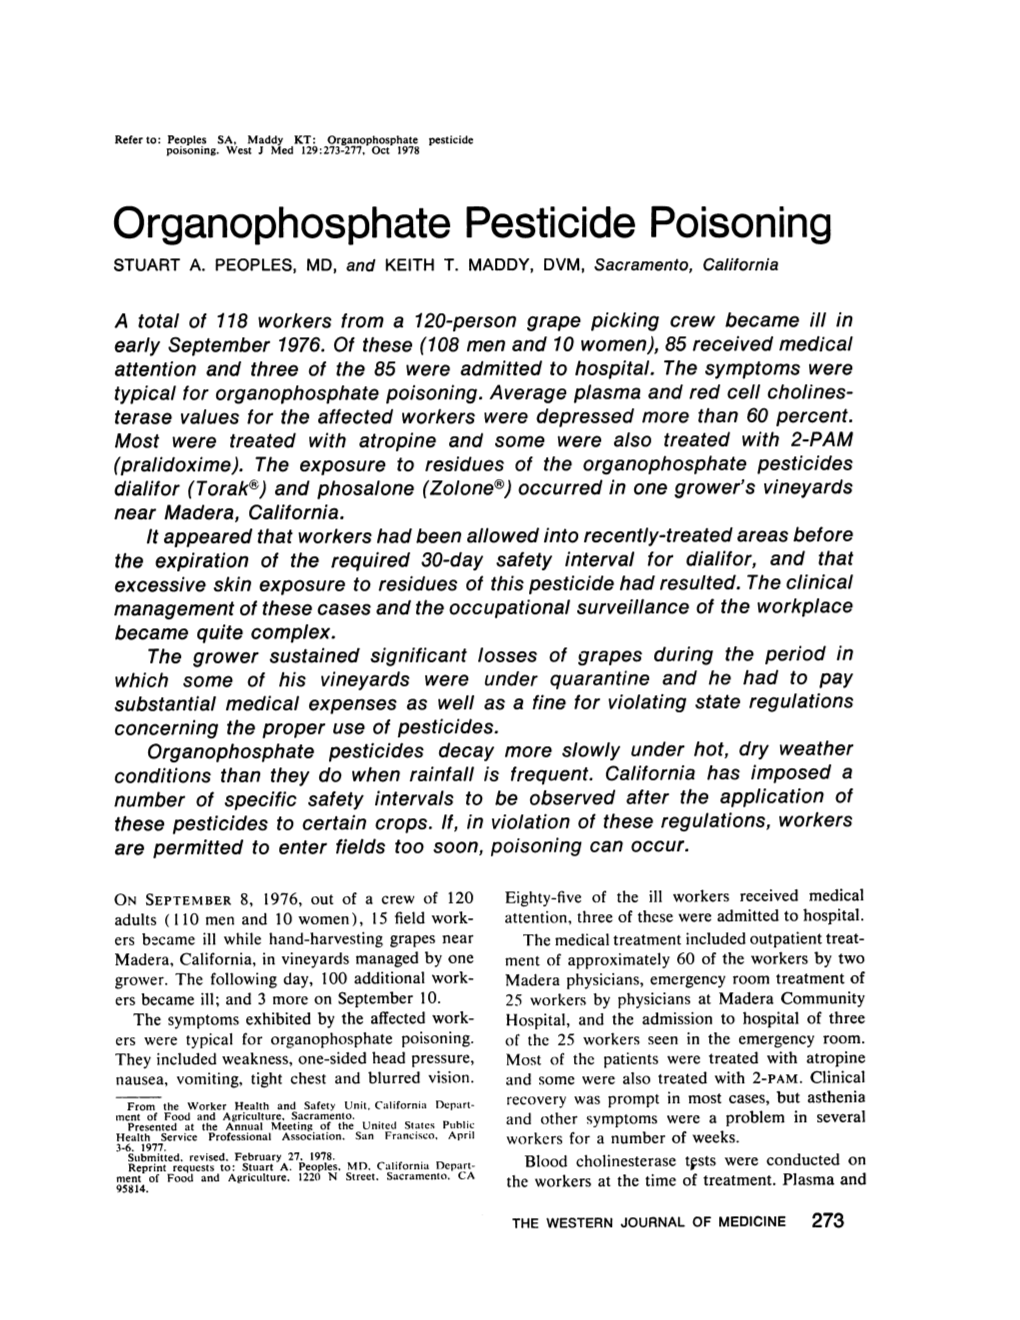 Organophosphate Pesticide Poisoning